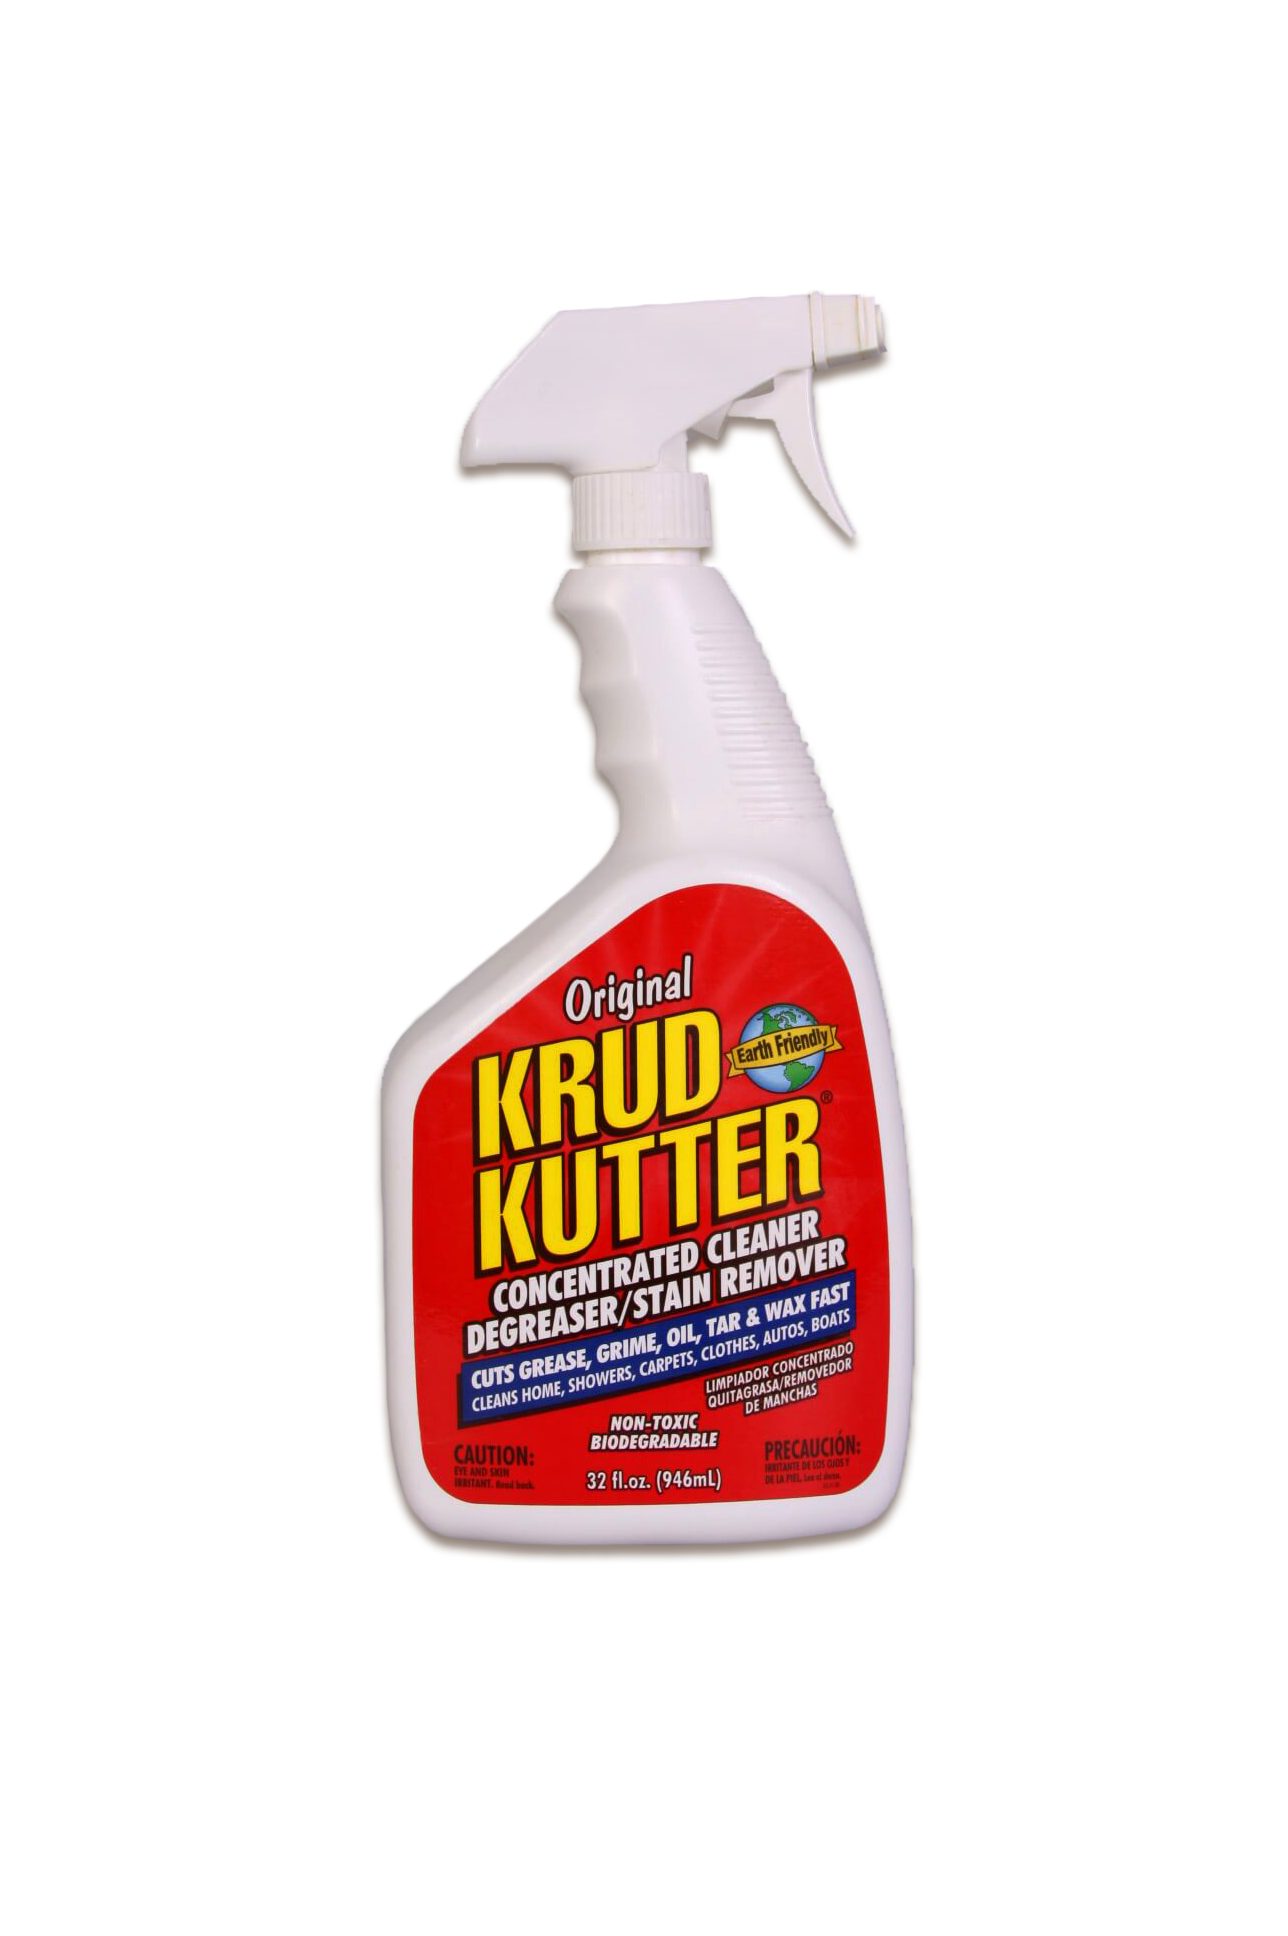 Krud Kutter product Label on a Bottle